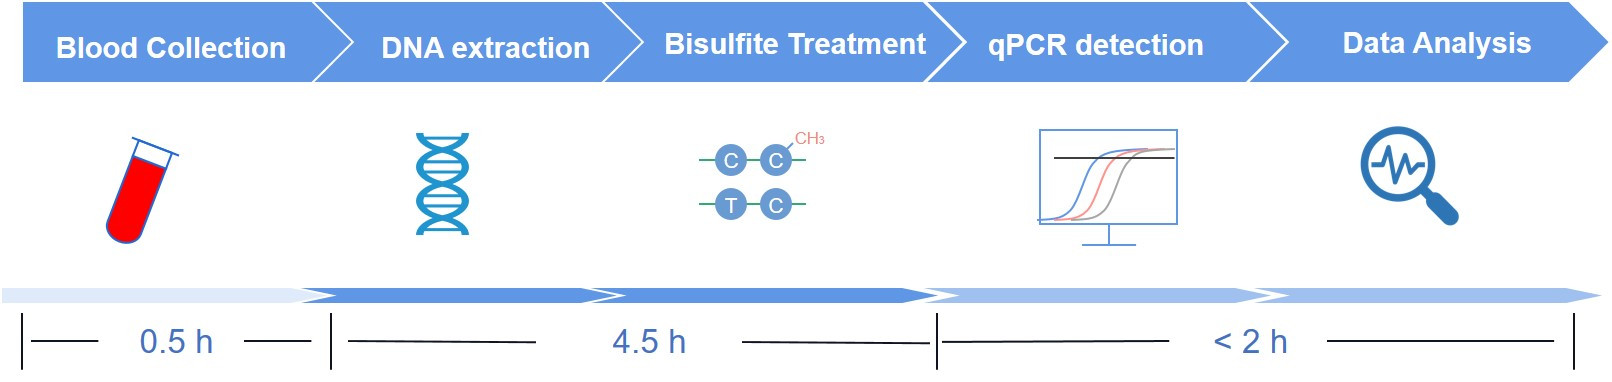 diagnostic-basis-of-ctdna-methylated-genes.jpg